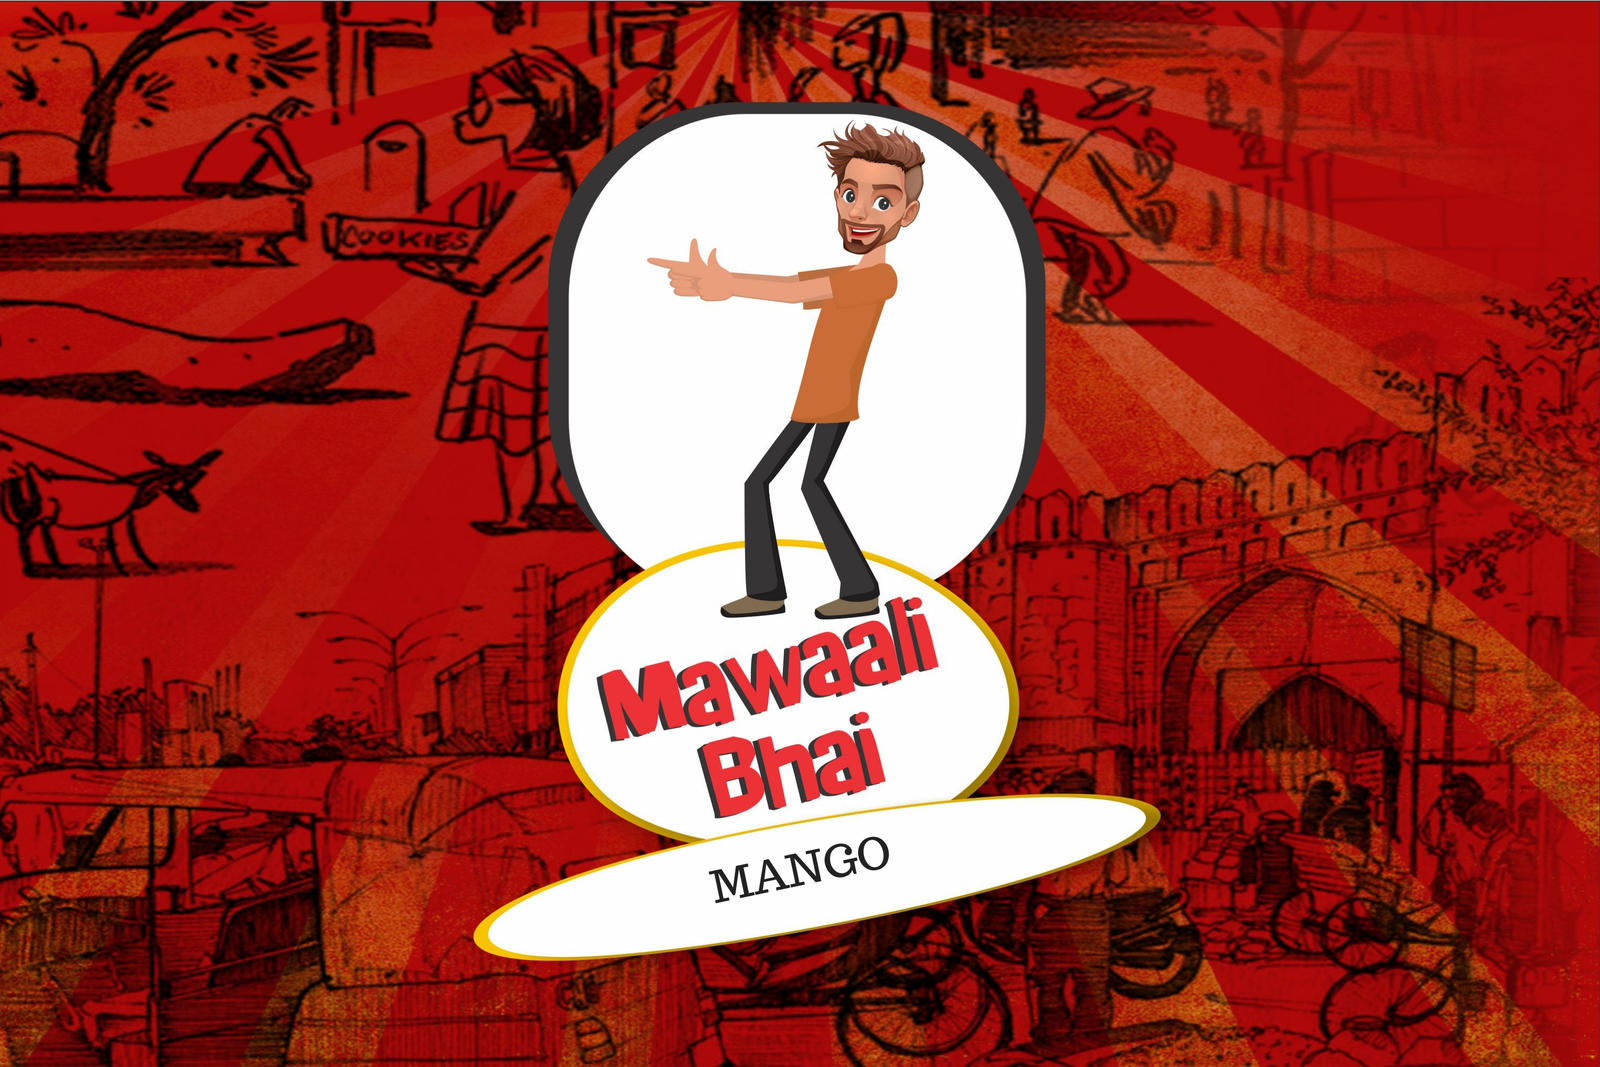 Mawaali Bhai - Mango